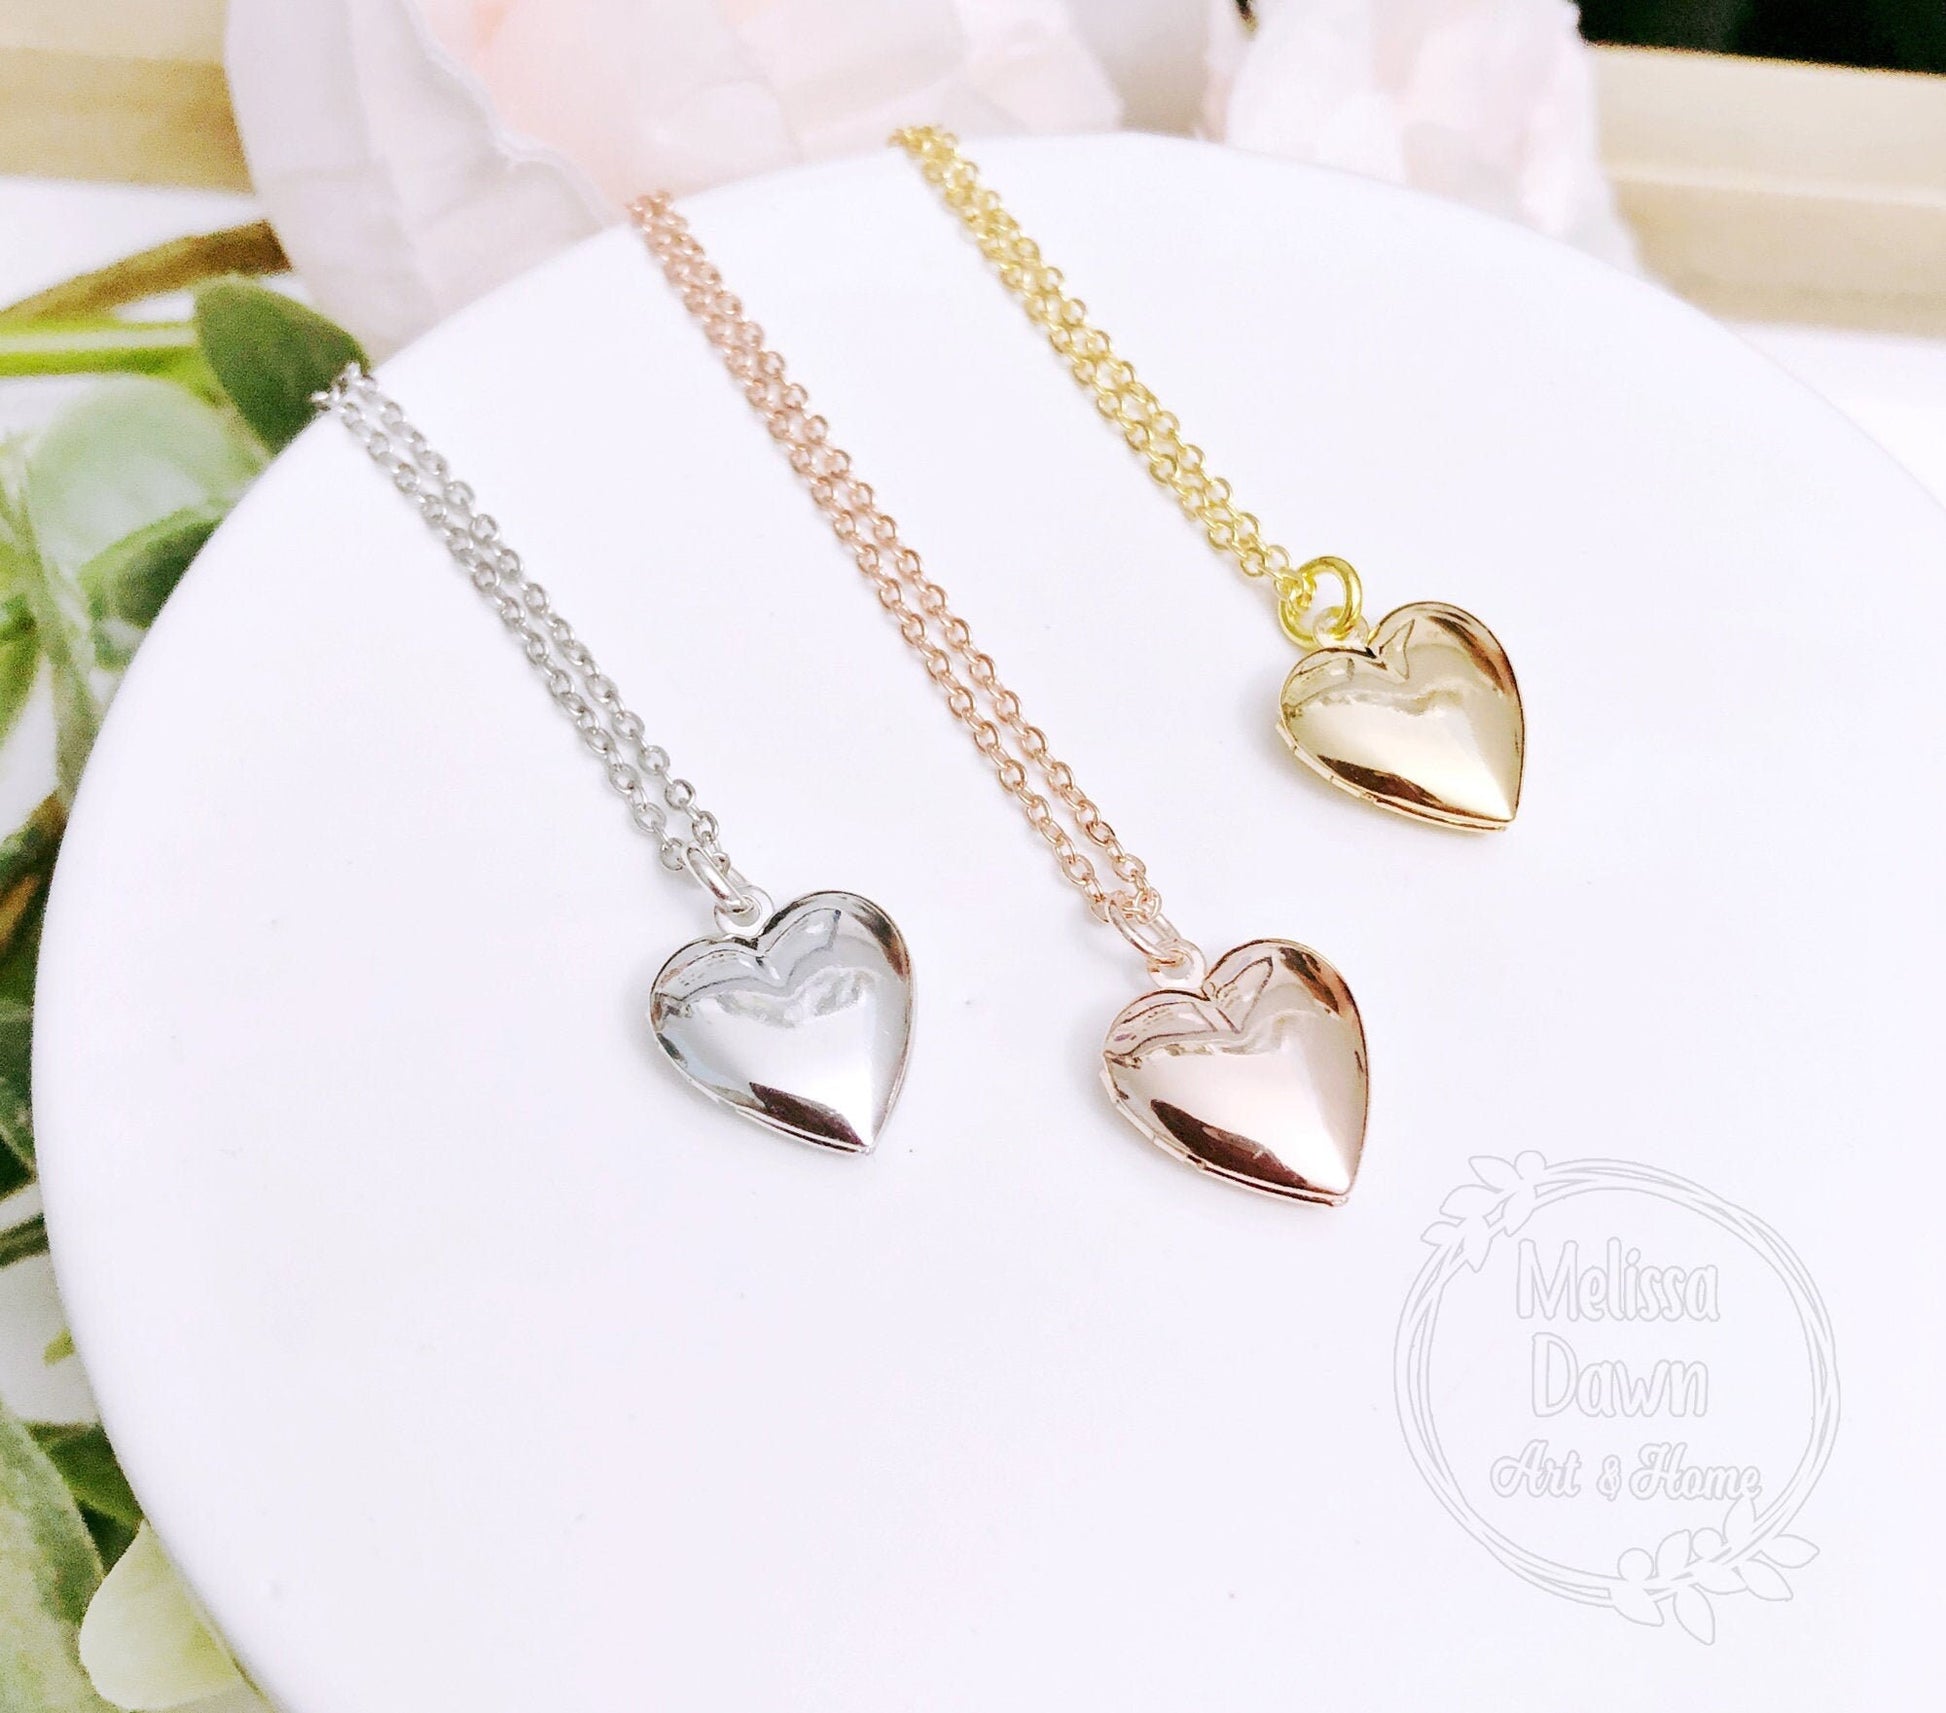 Locket Necklace / Heart Locket / Tiny Heart Locket / Photo Locket / Heart Necklace / Flower Girl Gift / Personalized Locket / Dainty Locket